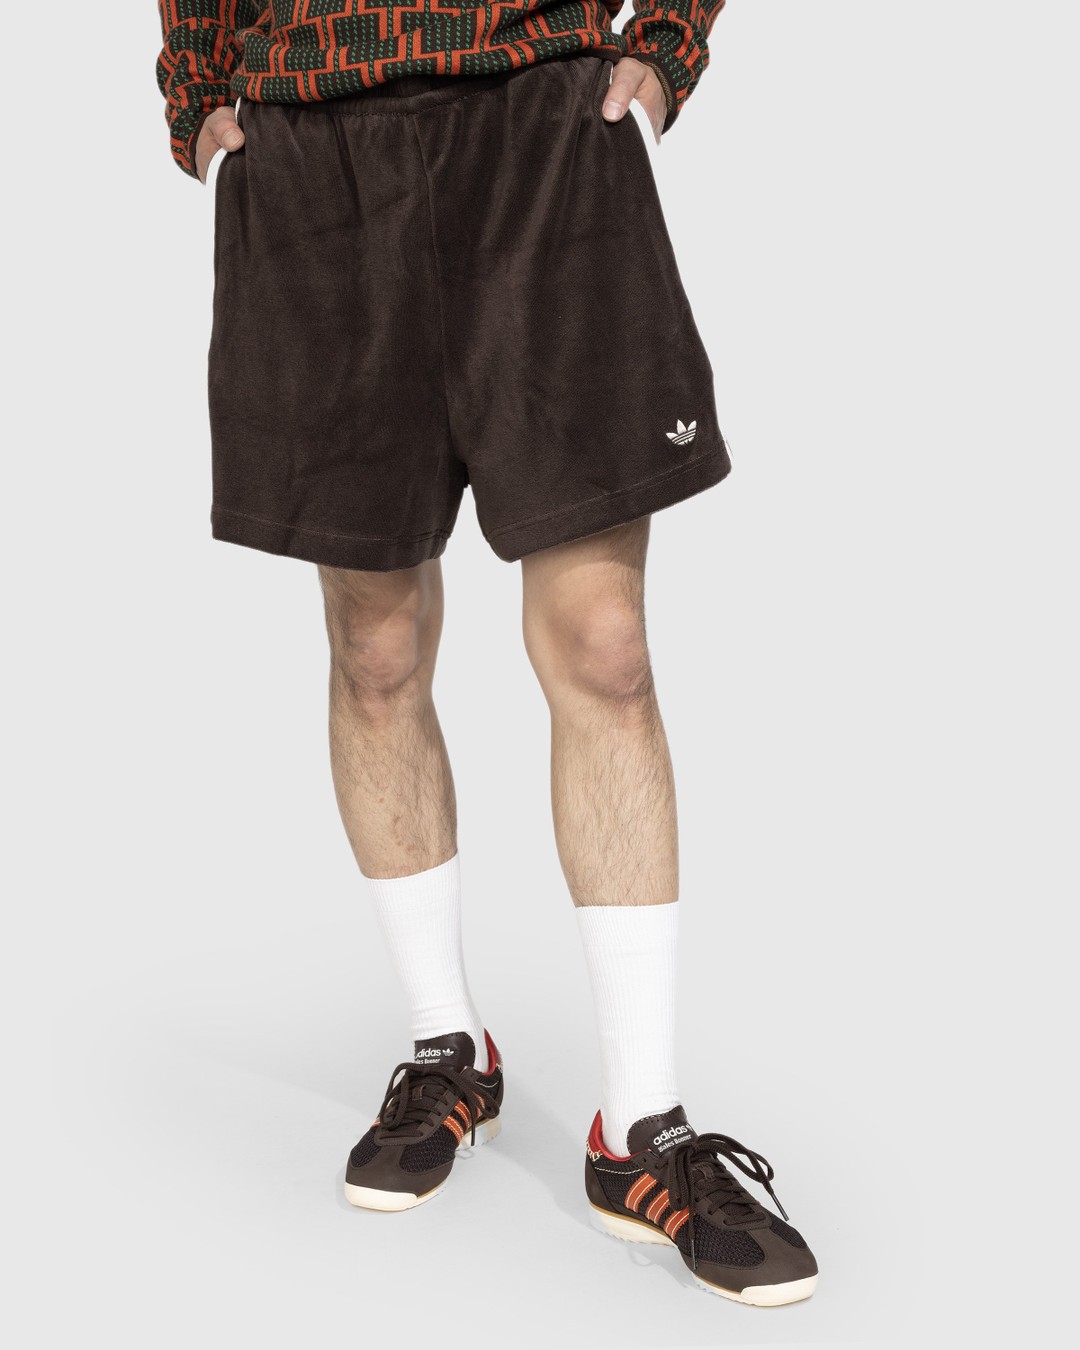 Menagerry nieuws Bakken Adidas x Wales Bonner – Cotton Blend Shorts Dark Brown | Highsnobiety Shop